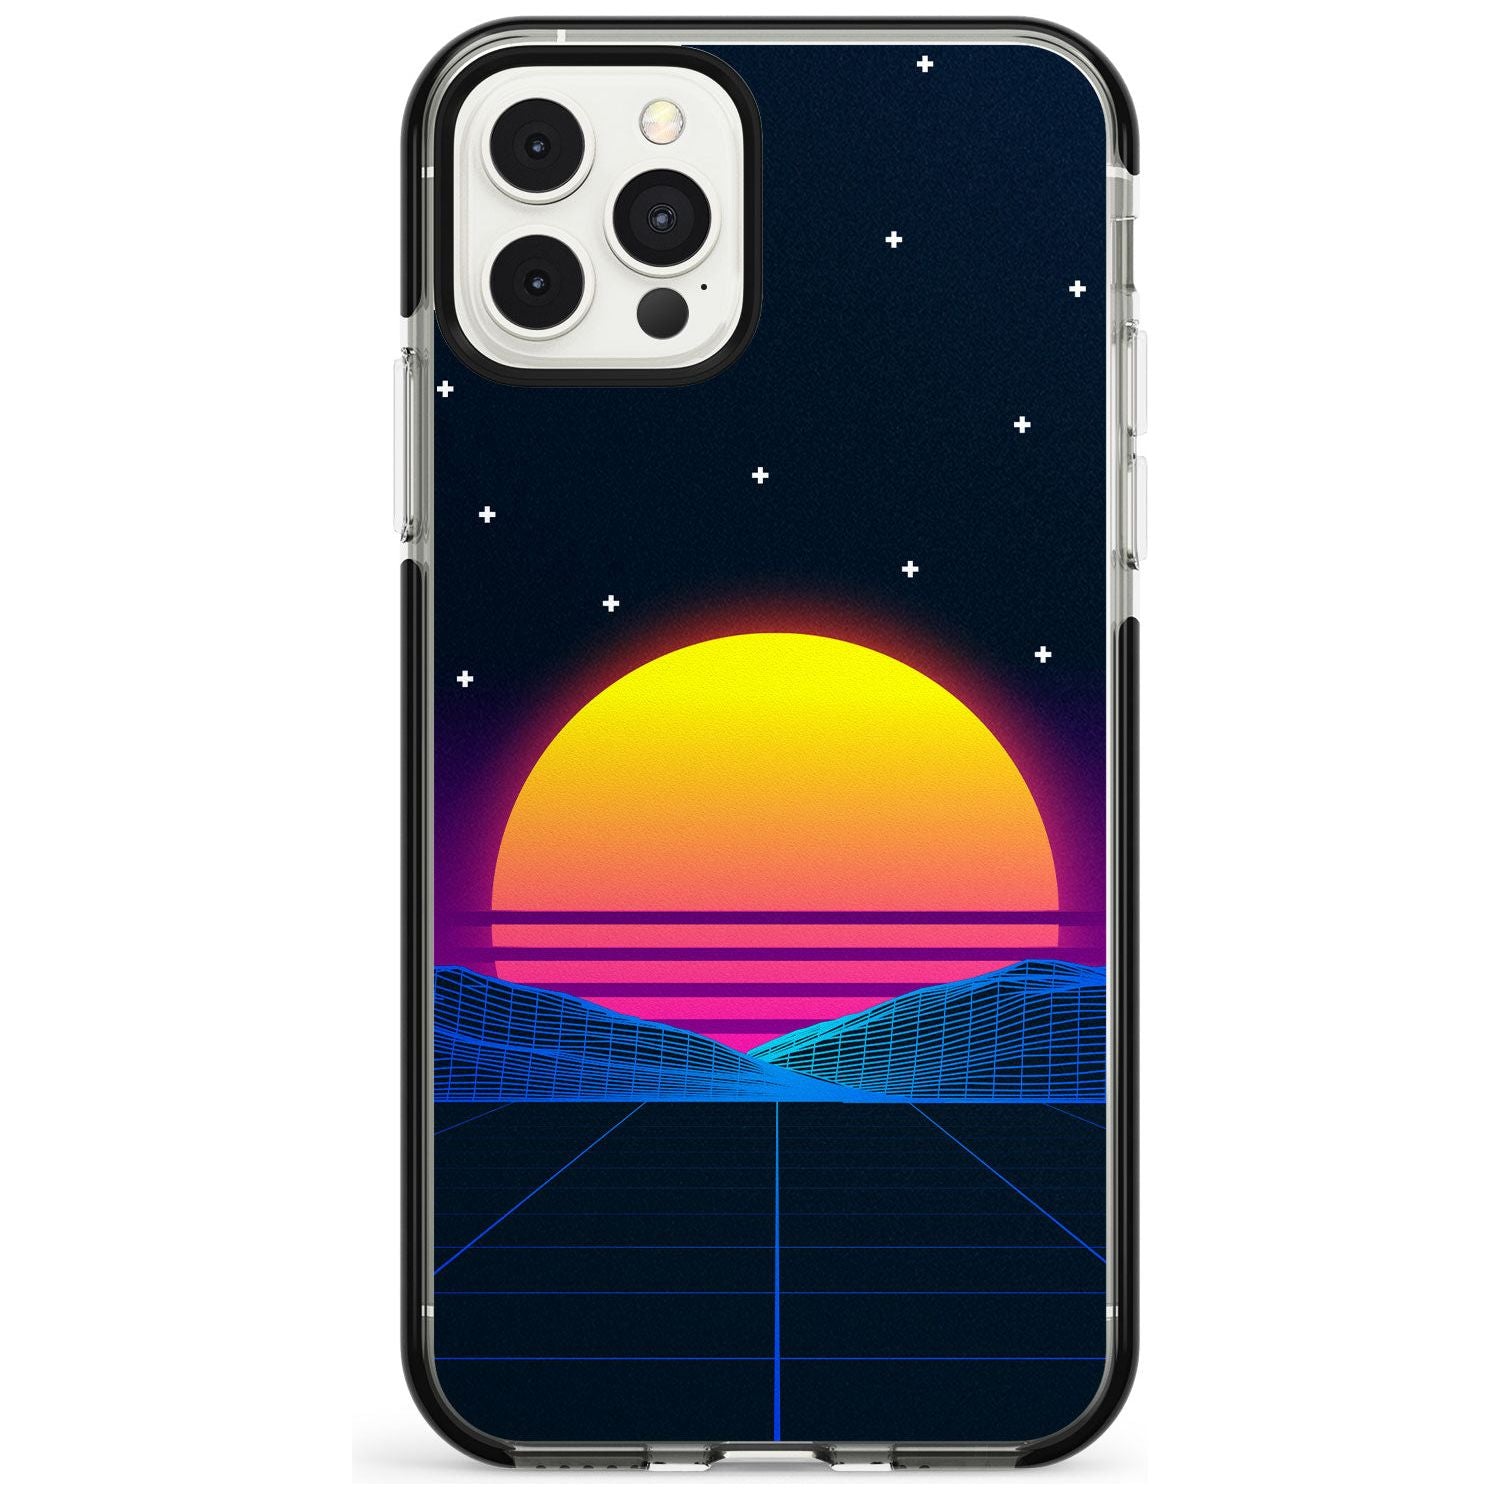 Retro Sunset Vaporwave Black Impact Phone Case for iPhone 11